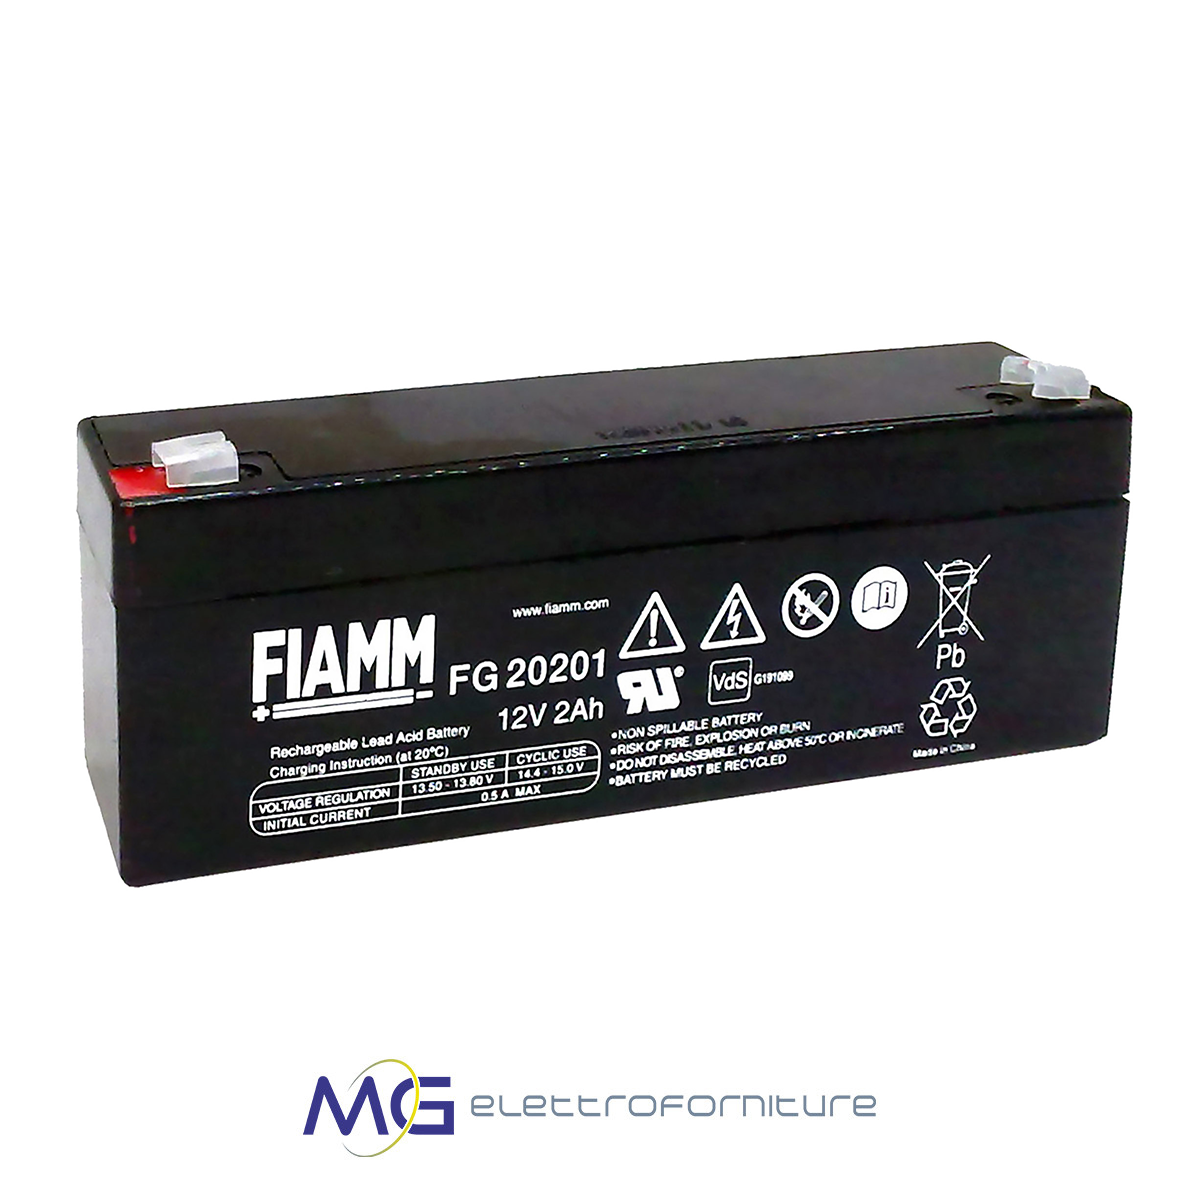 FIAMM FG20201 Batteria al piombo ermetica ricaricabile 12V 2Ah